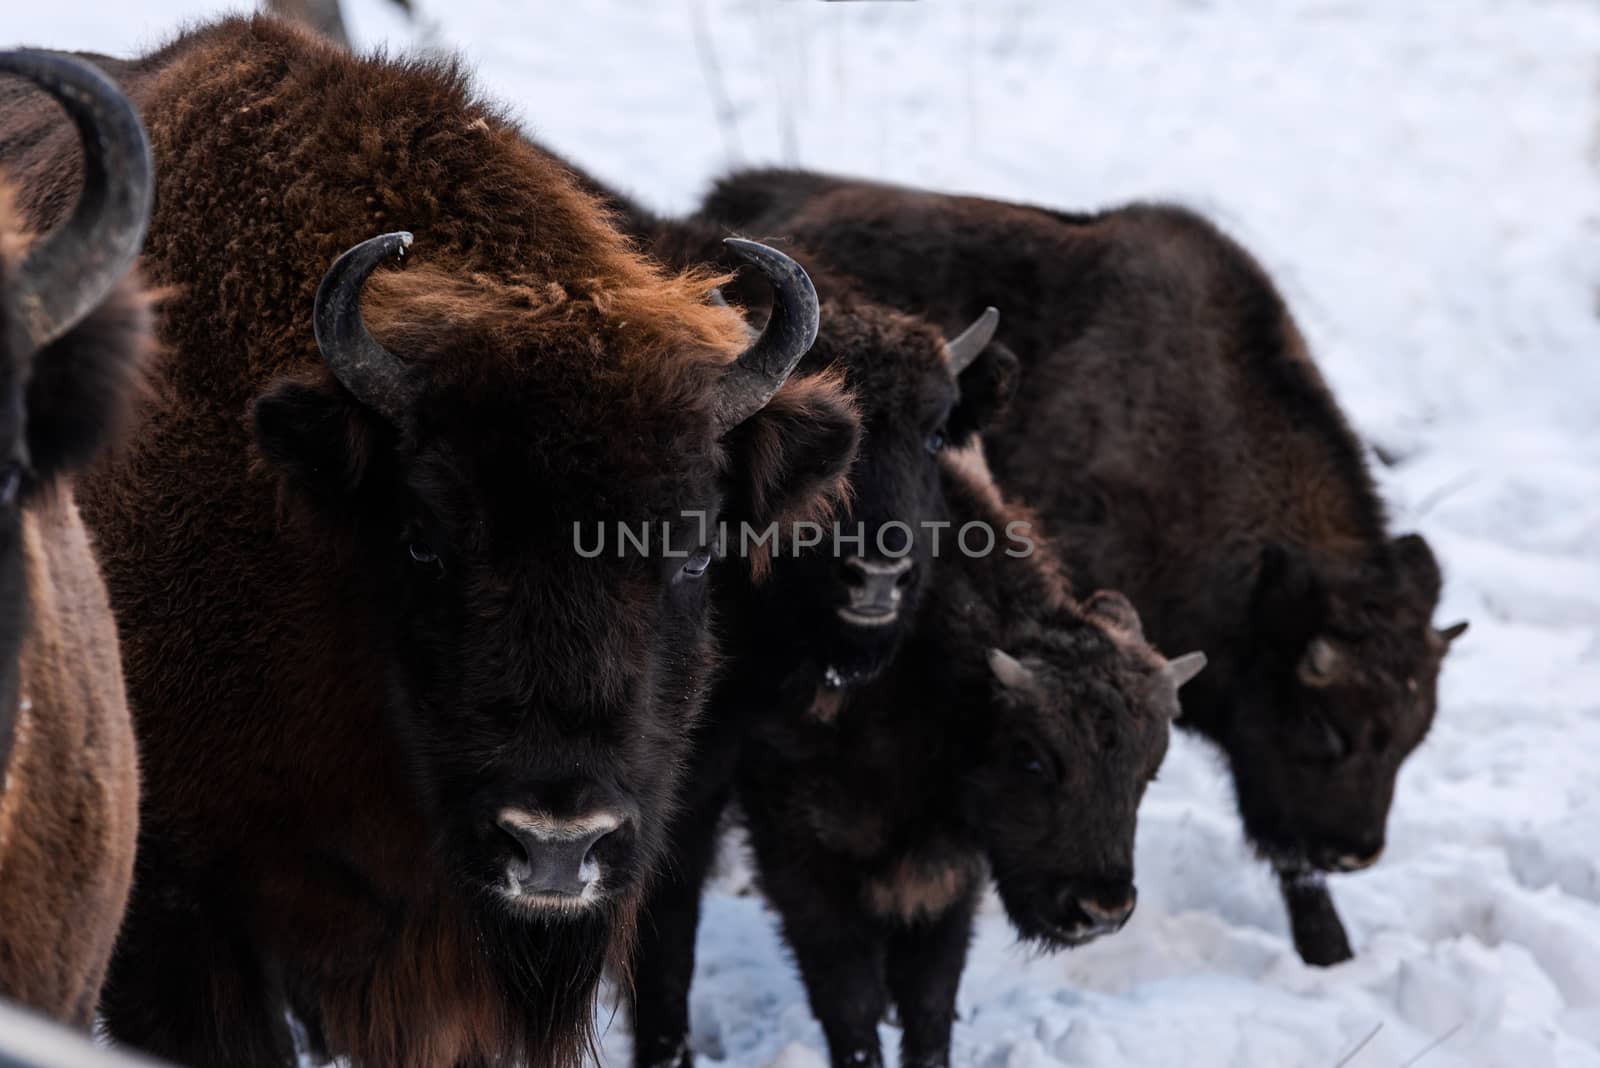 European bison (Bison bonasus) Family Portrait Outdoor at Winter Season.